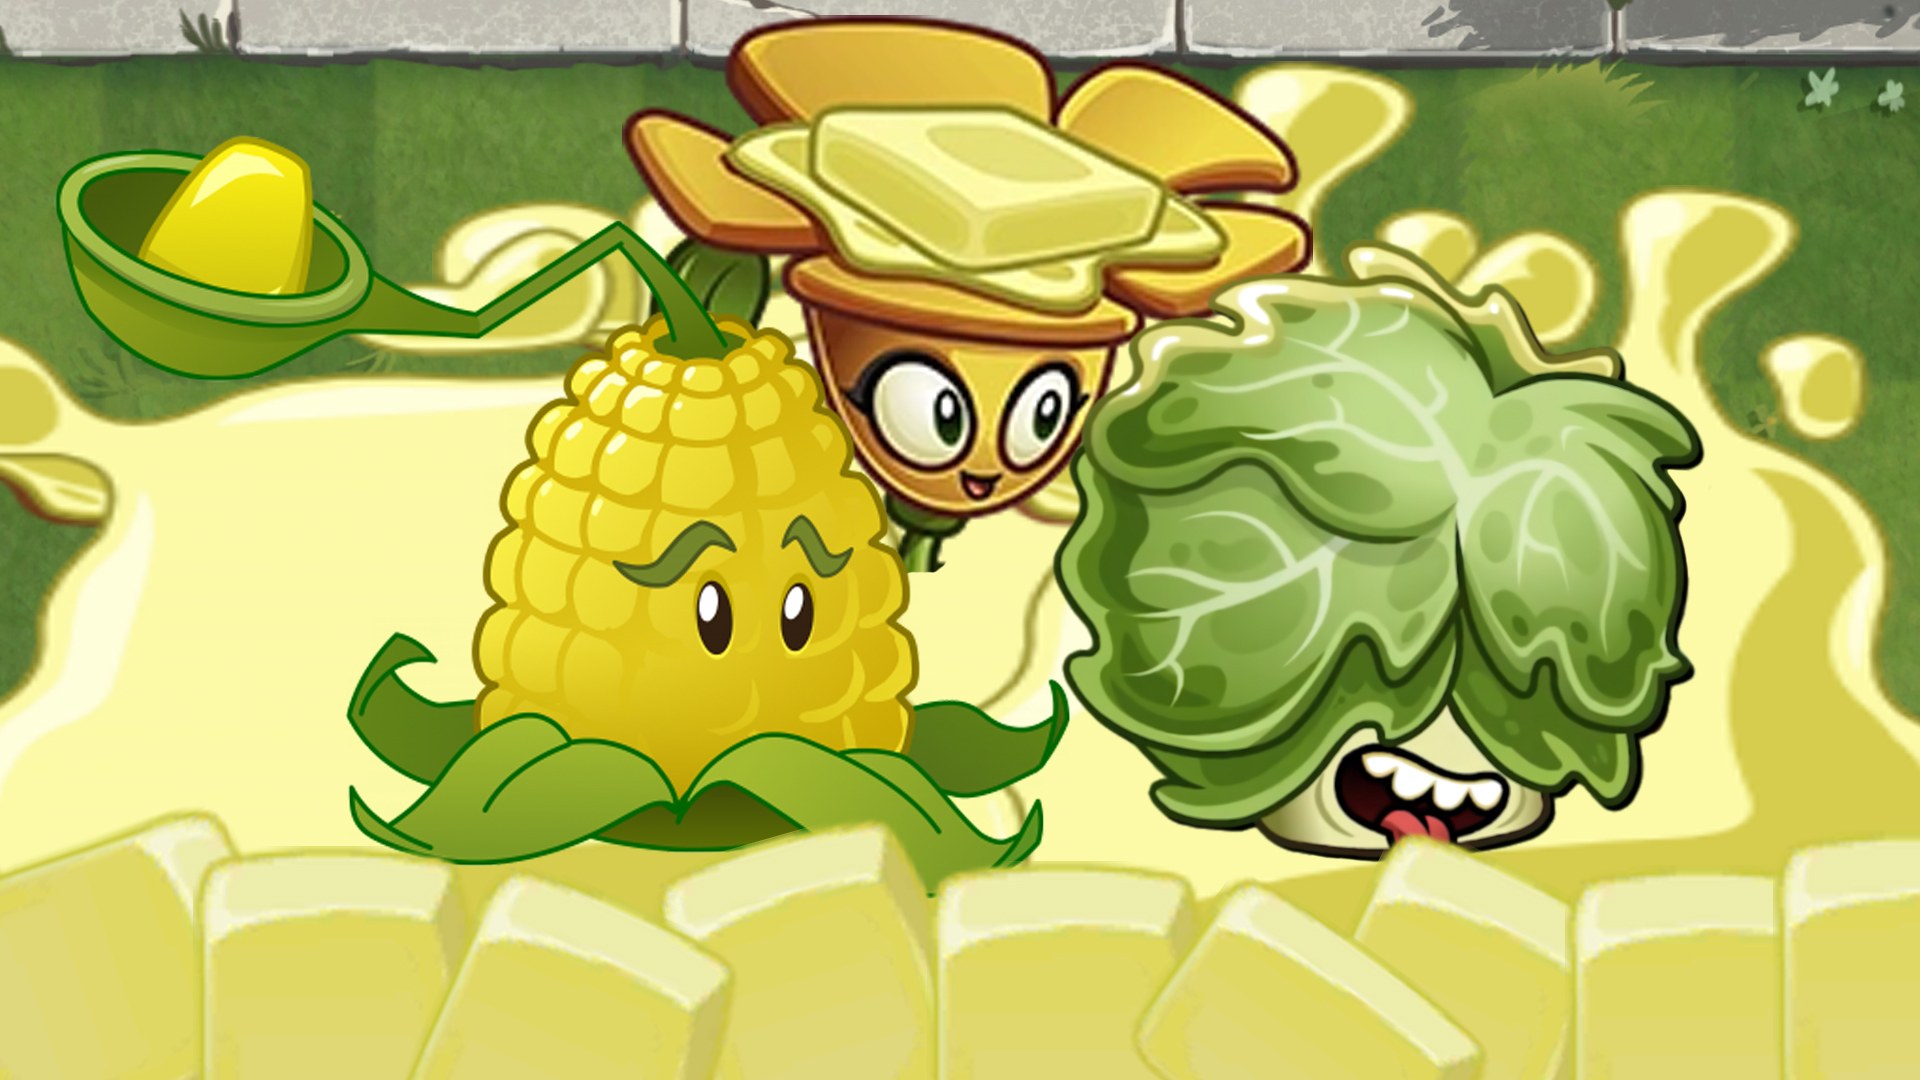 Plants vs zombies pvz 2. Buttercup pvz2. Растения против зомби Buttercup. PVZ 2 Горохострел. Растения против зомби Альманах.